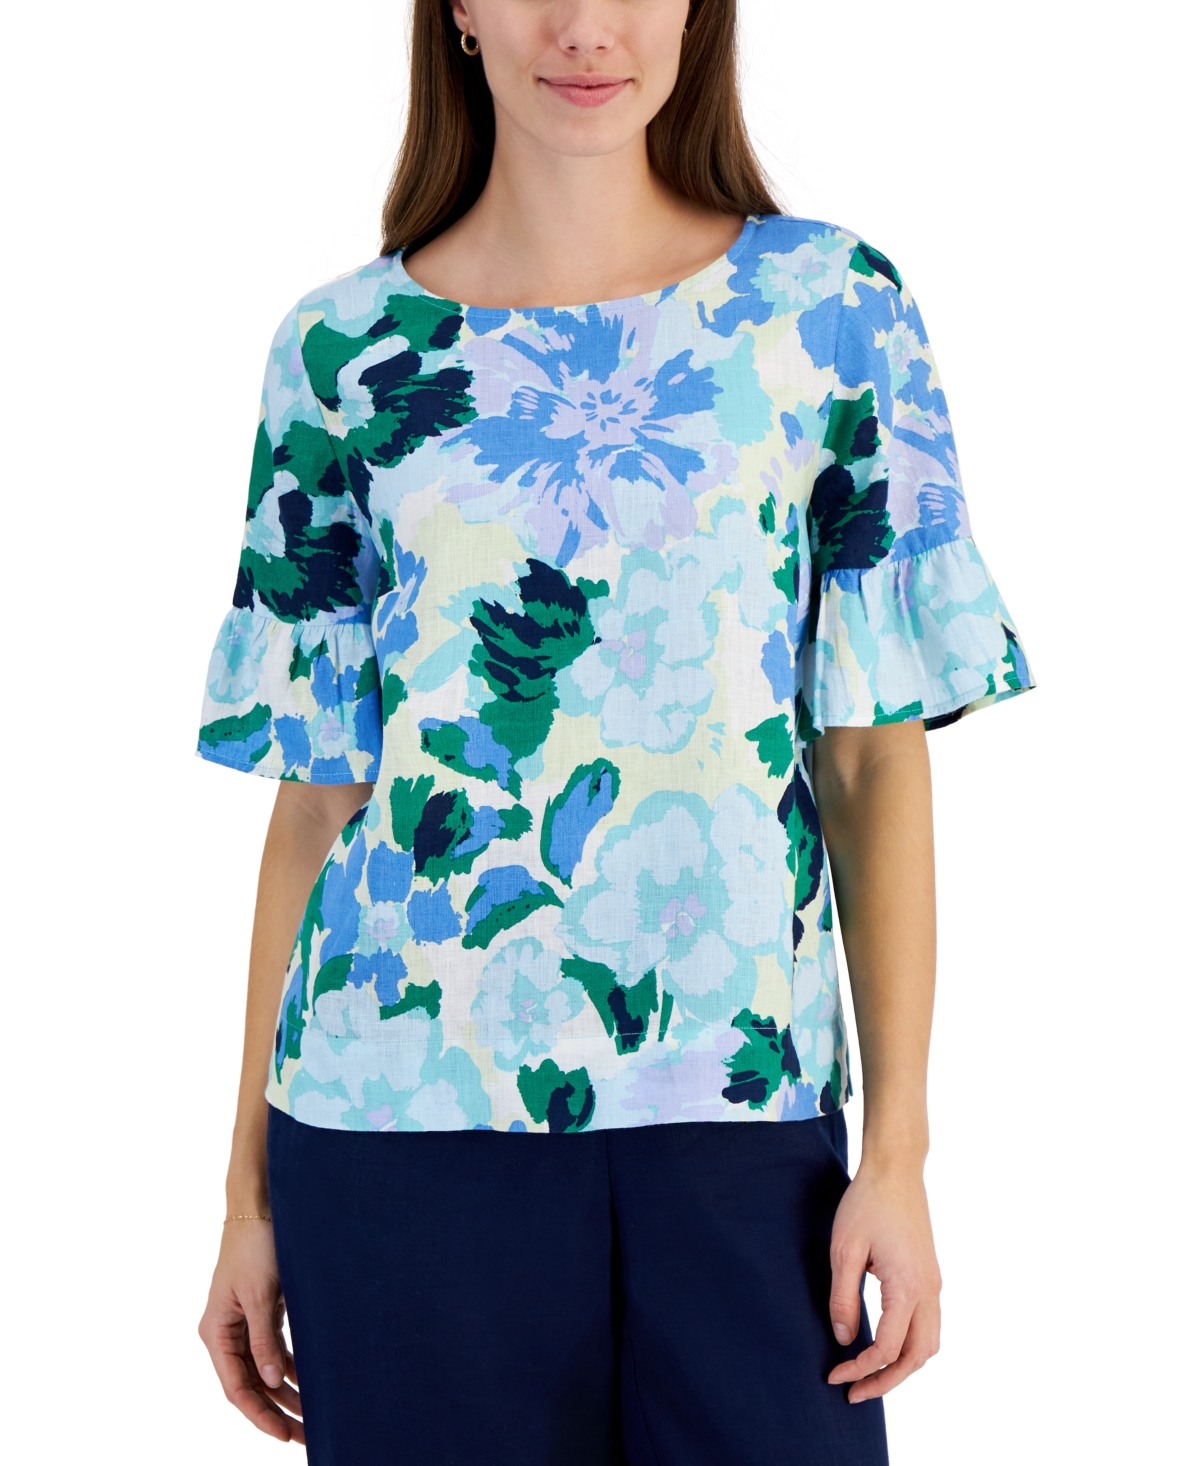 Women's 100% Linen Garden Blur Ruffled Top, Created for Macy's - Light Pool Blue